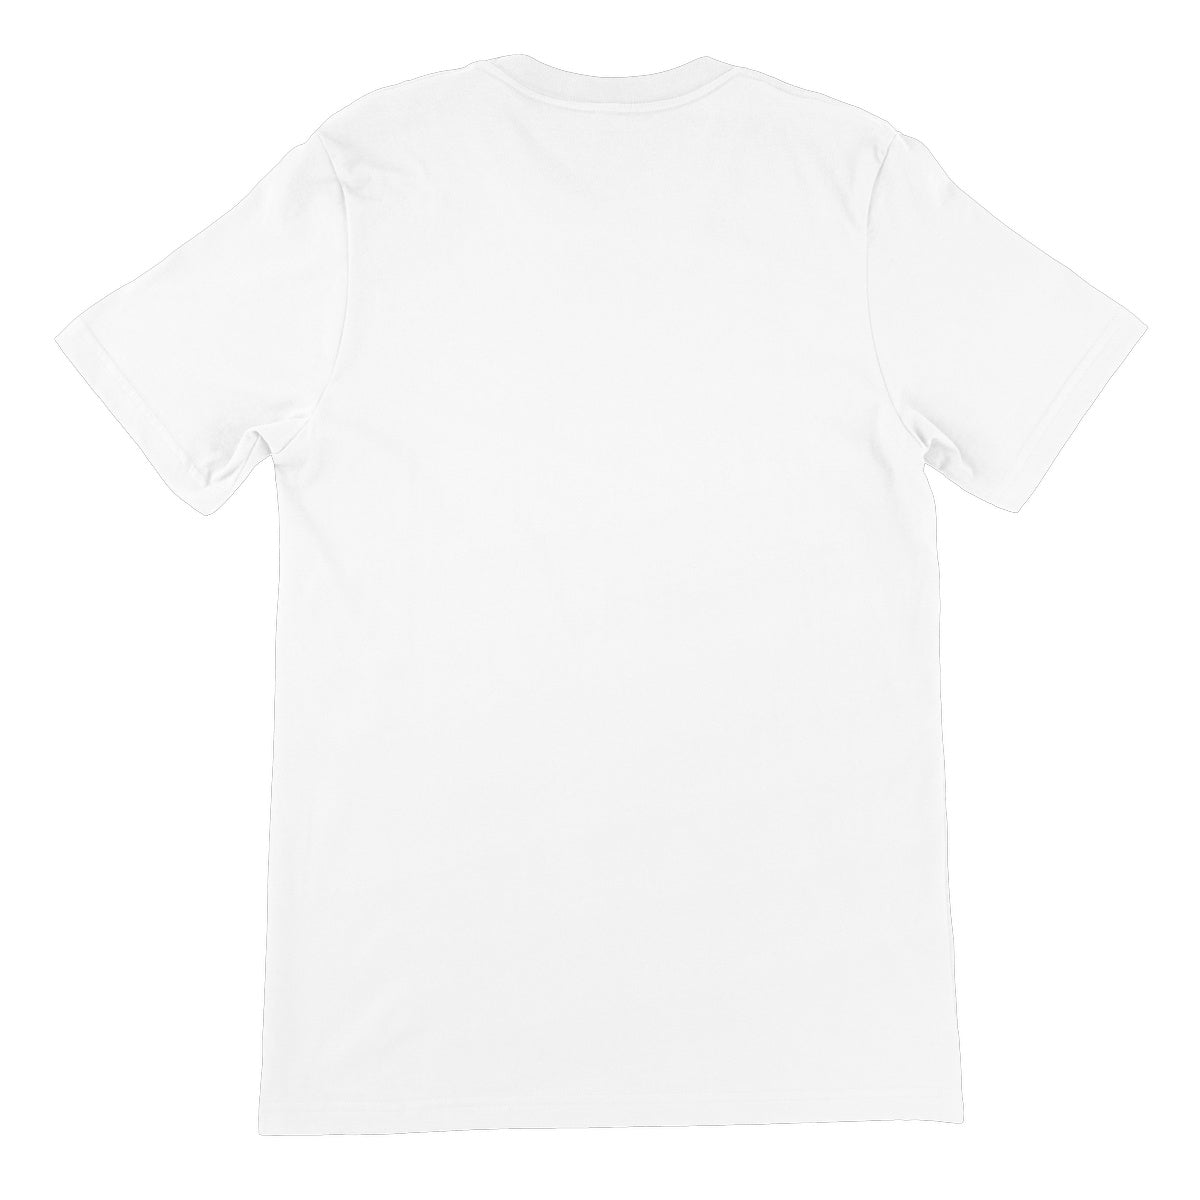 Fear The Walking Dead S3 Illustrated Tee Unisex Short Sleeve T-Shirt